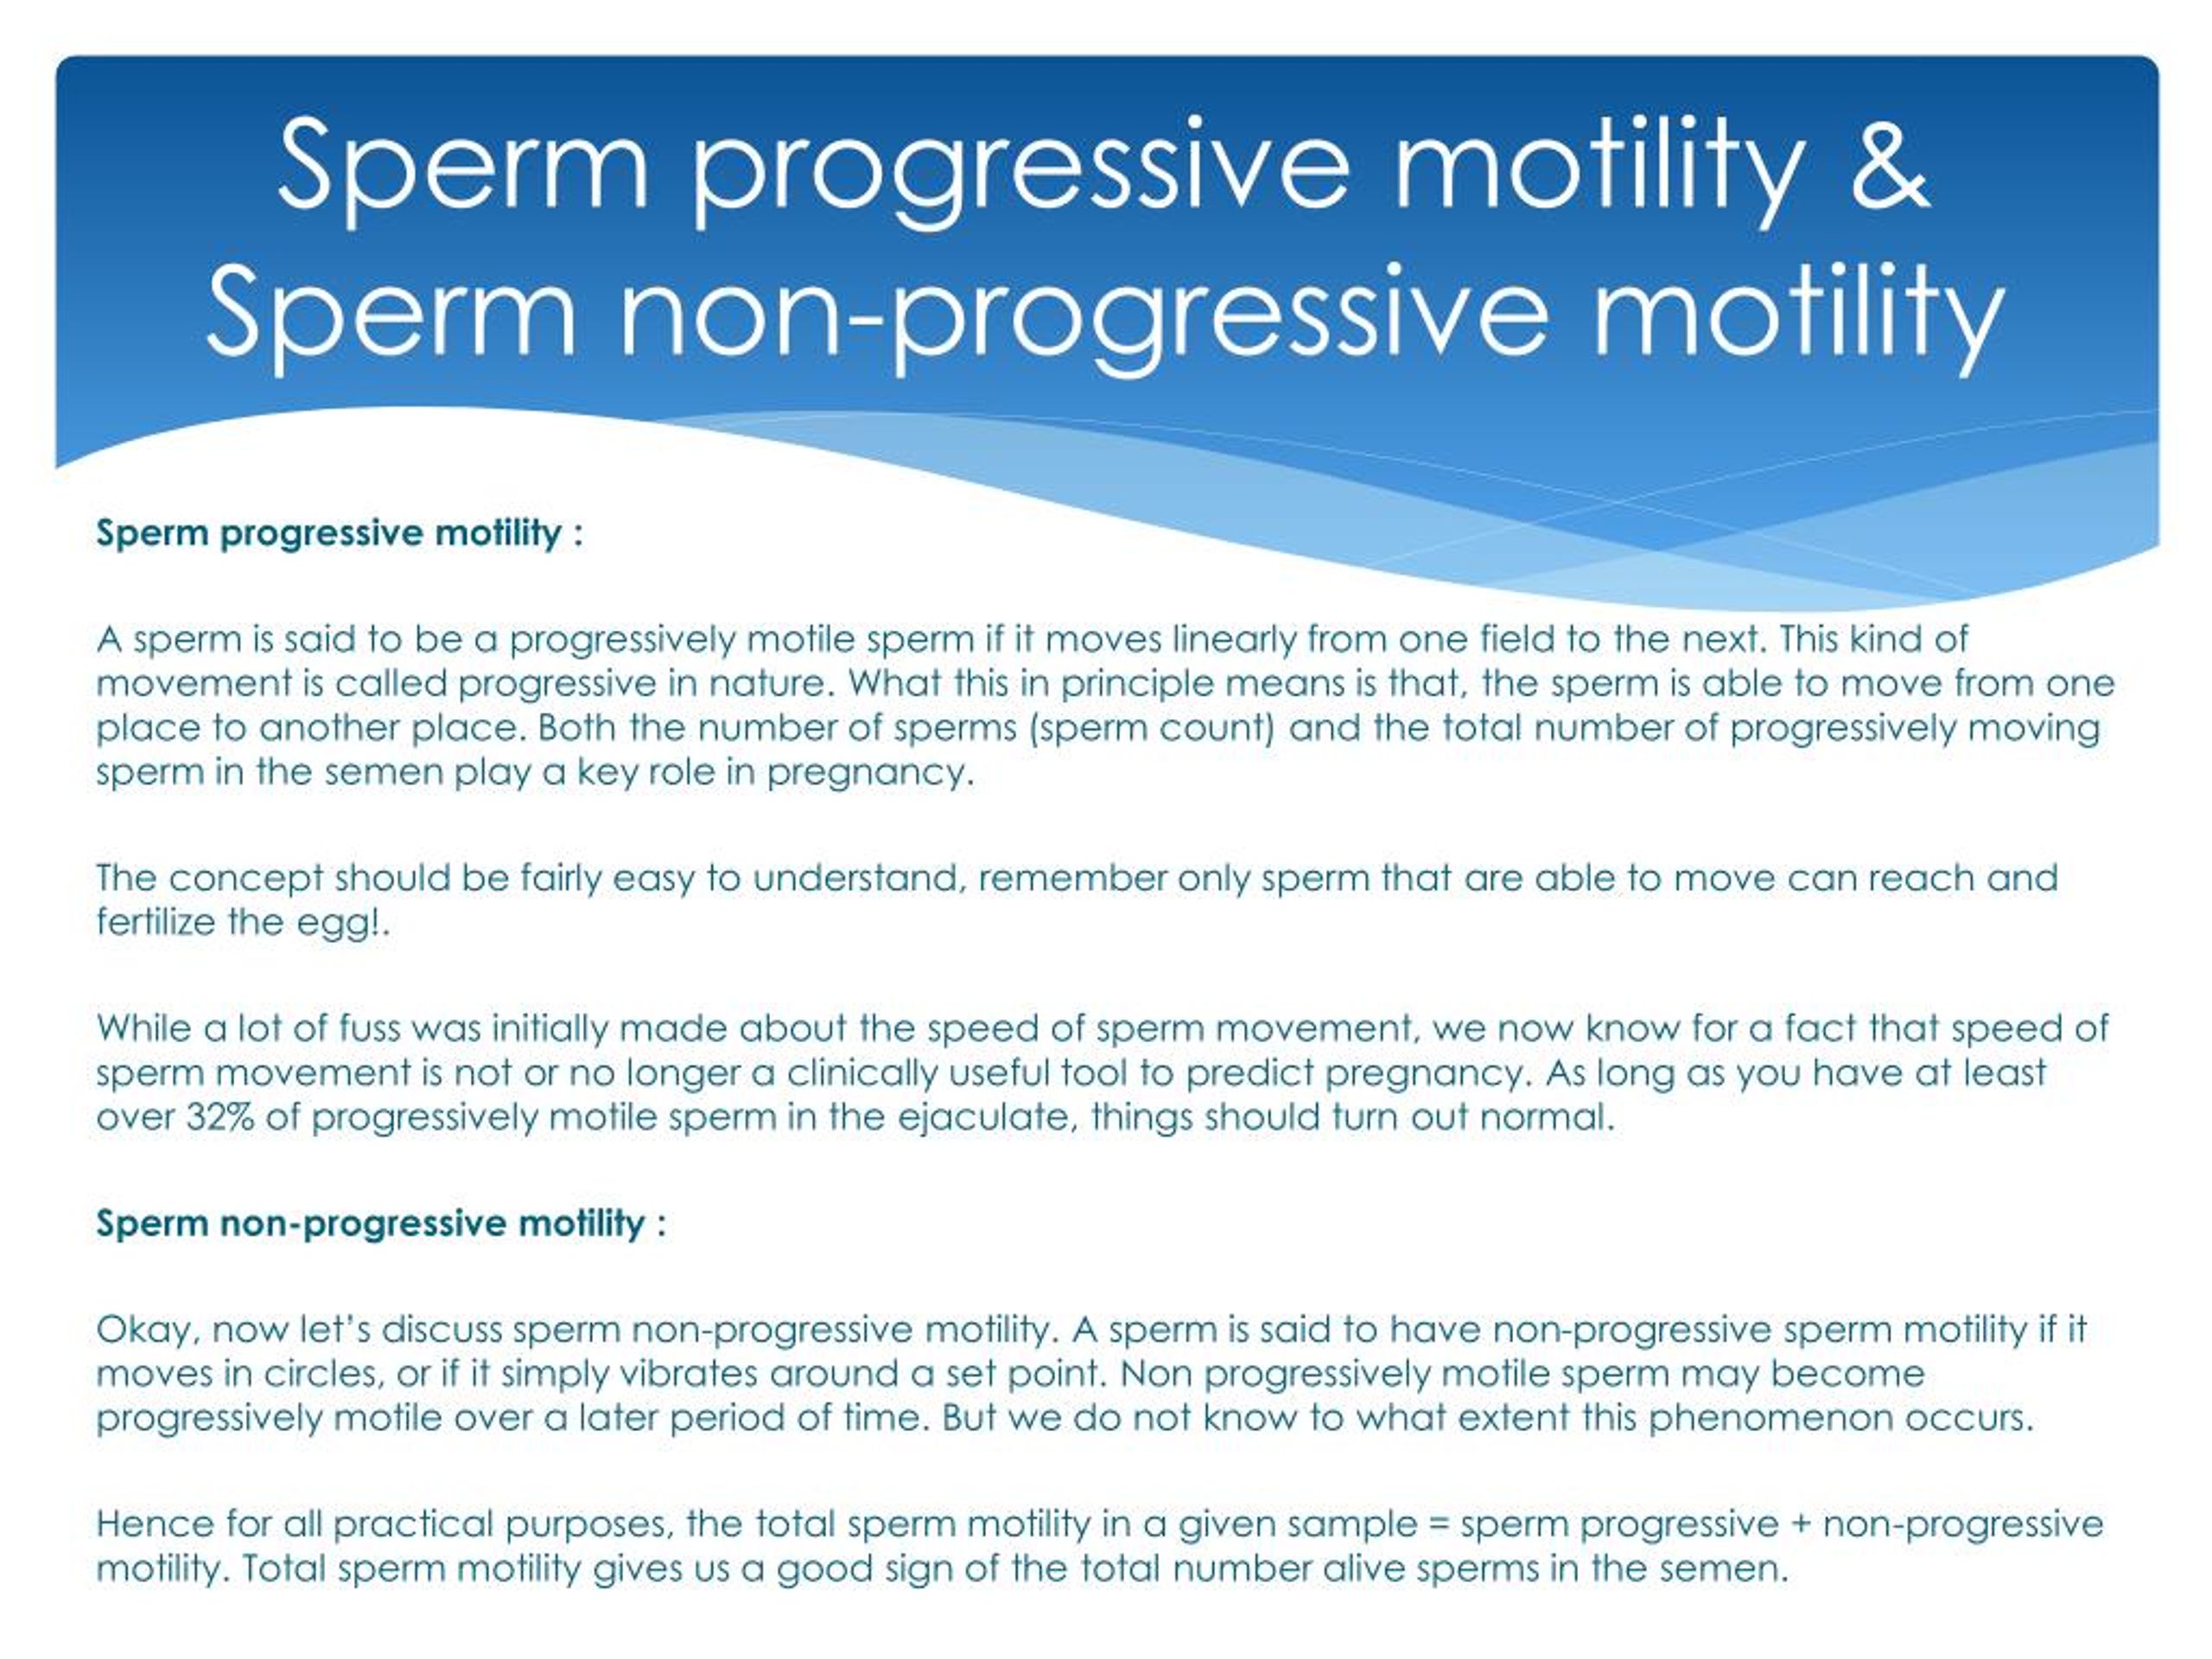 Sperm motility ability to move, horny lisa simpson